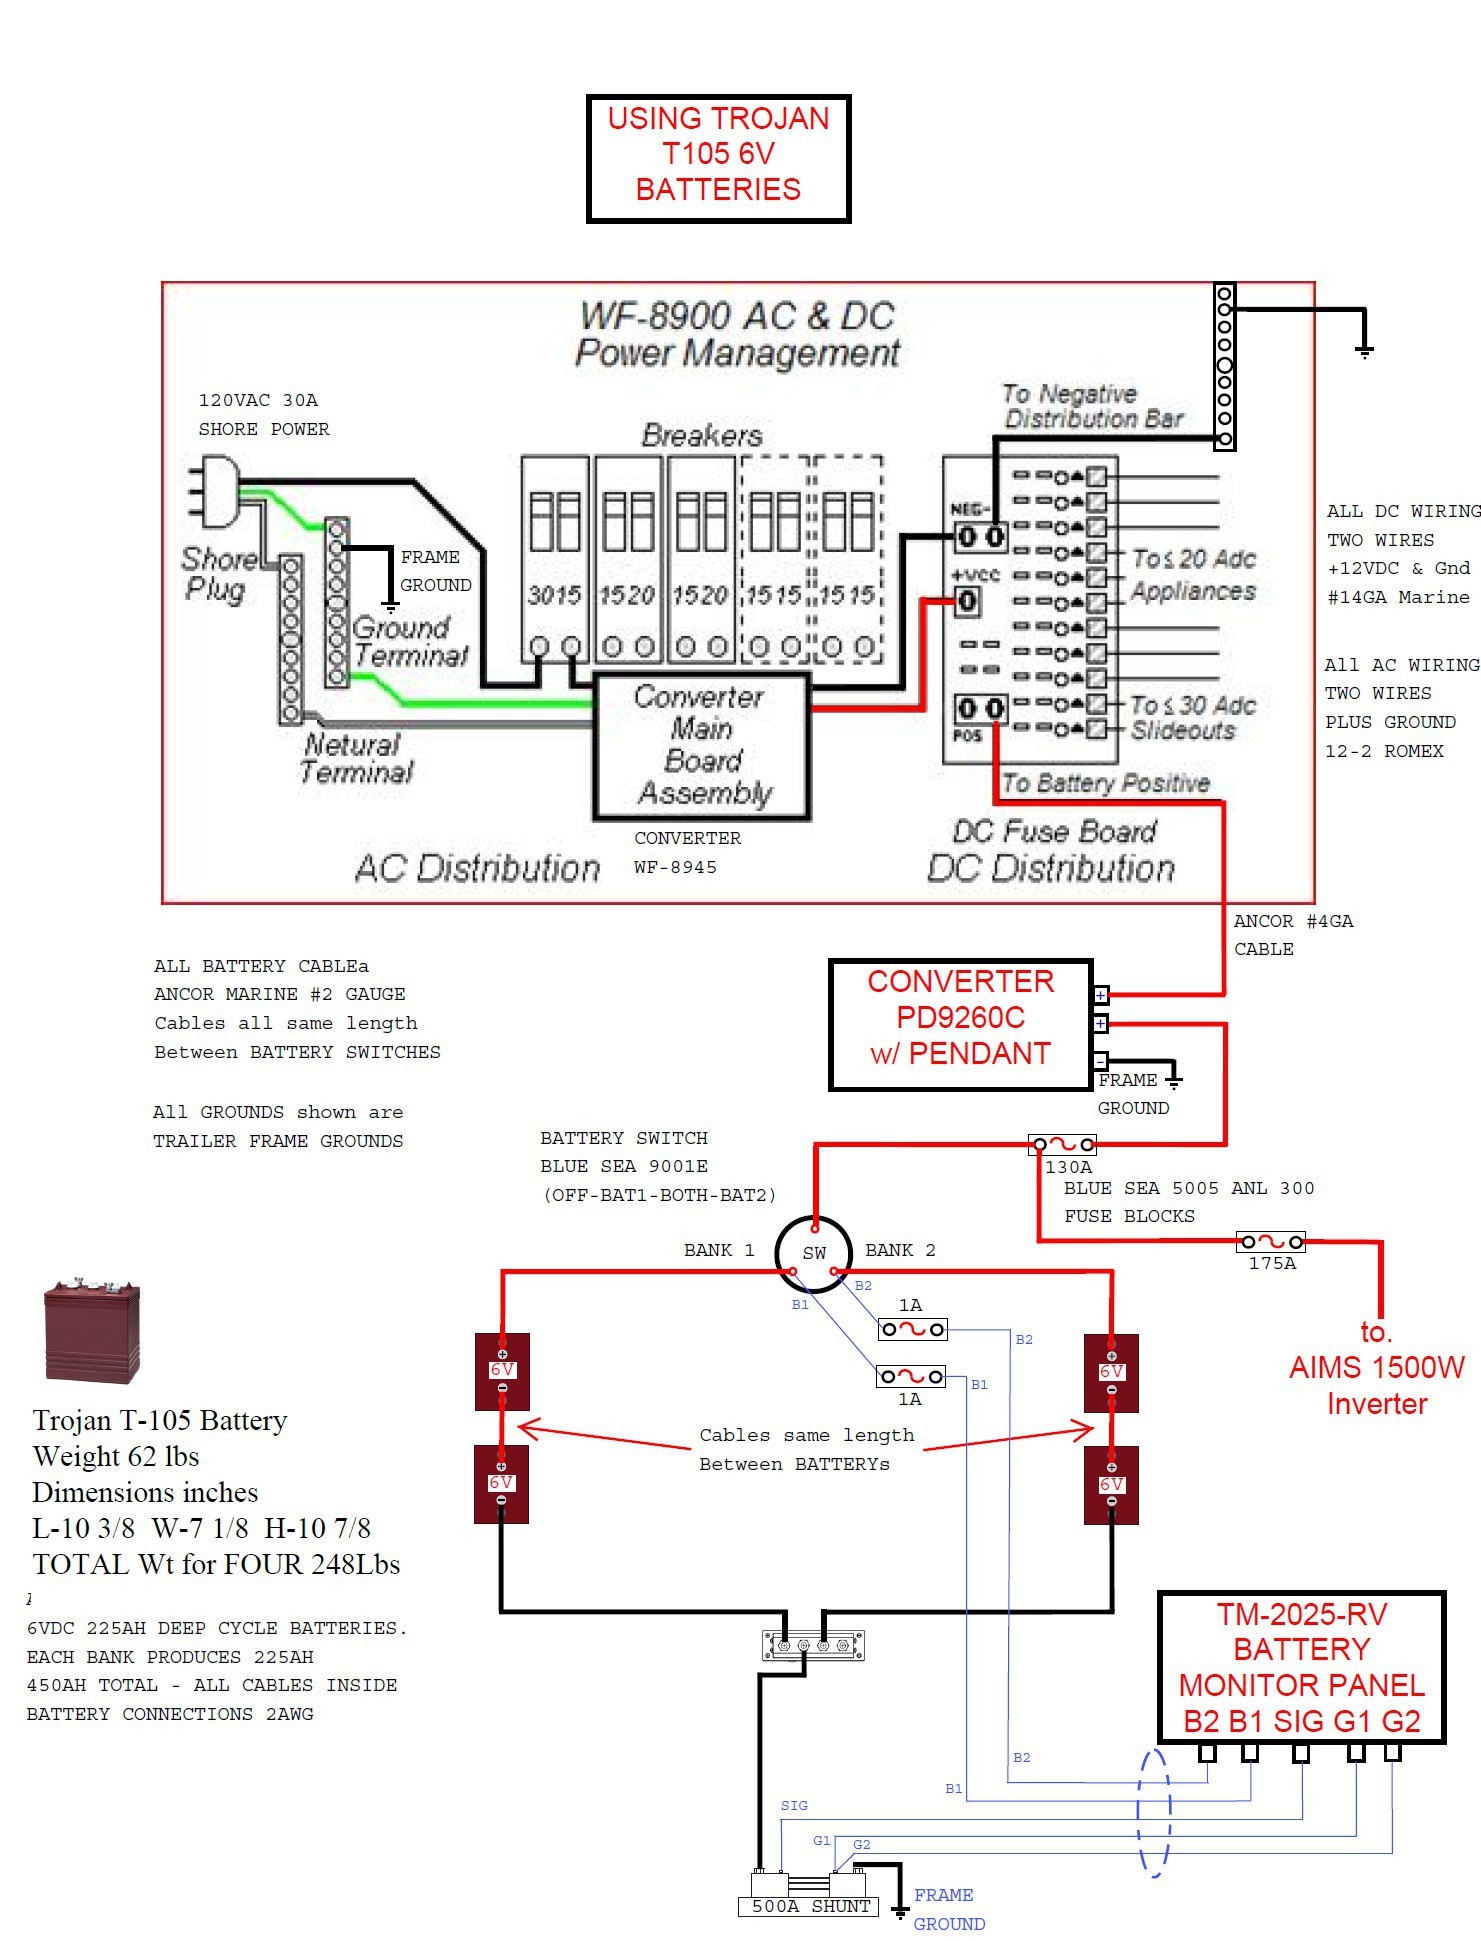 Rv Monitor Panel Wiring Diagram Unique Kib Micro Monitor Wiring Diagram Electrical Drawing Wiring Diagram